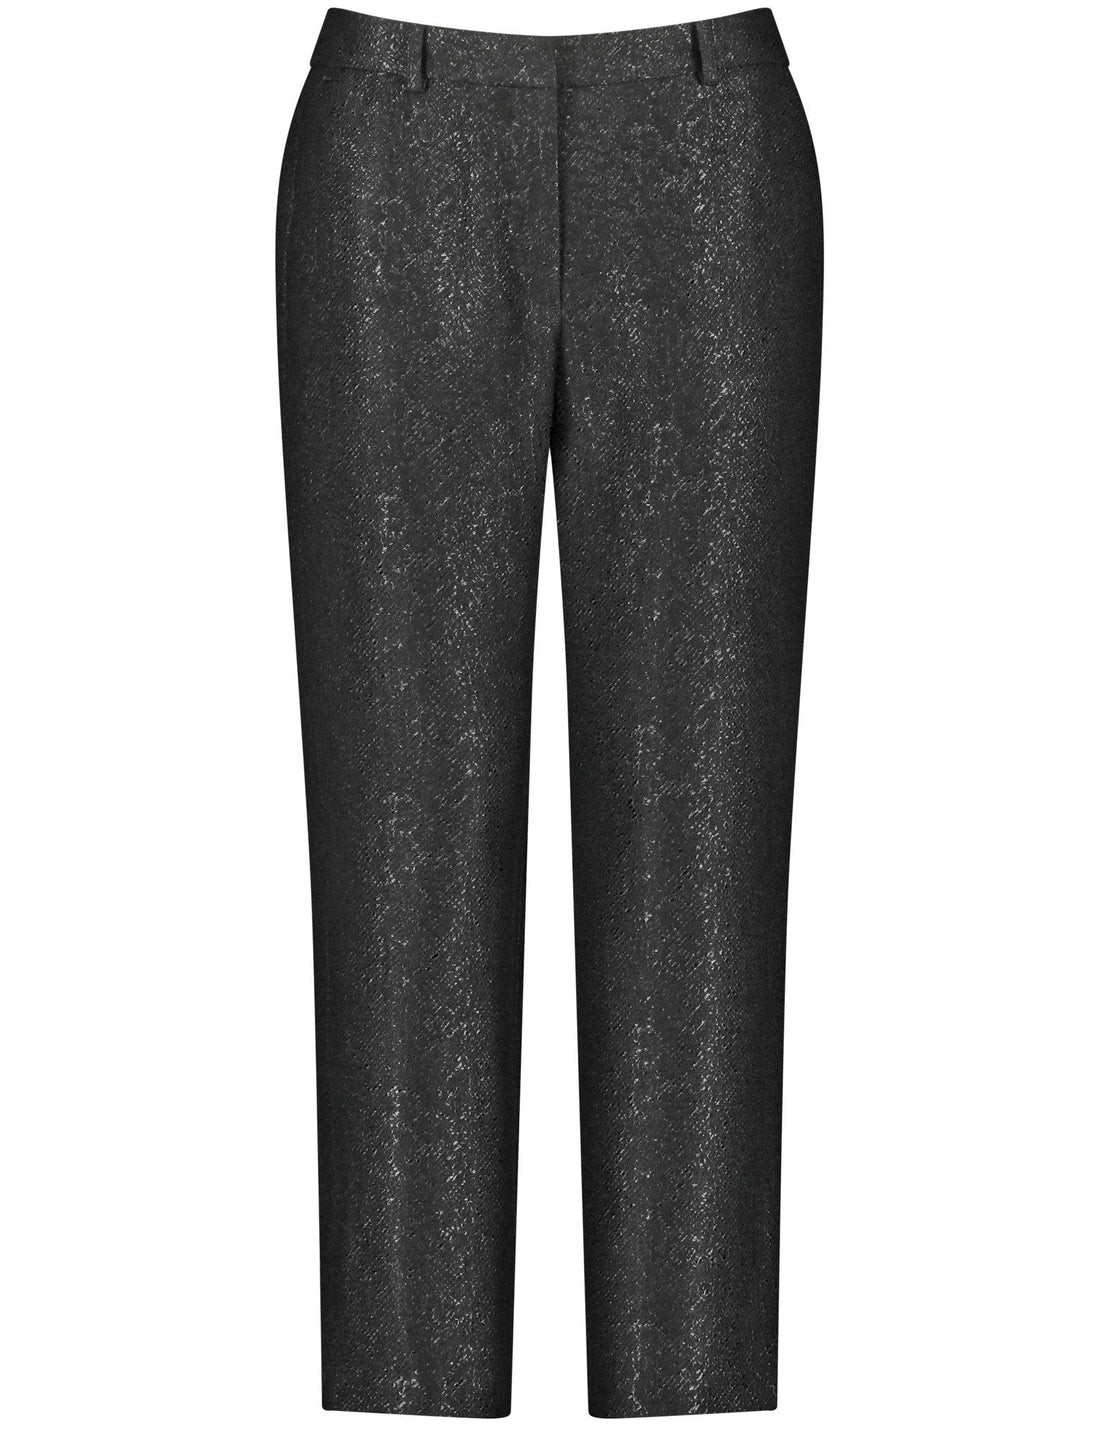 3-4-Length Trousers Made Of Shiny Jacquard_420433-11352_1100_02